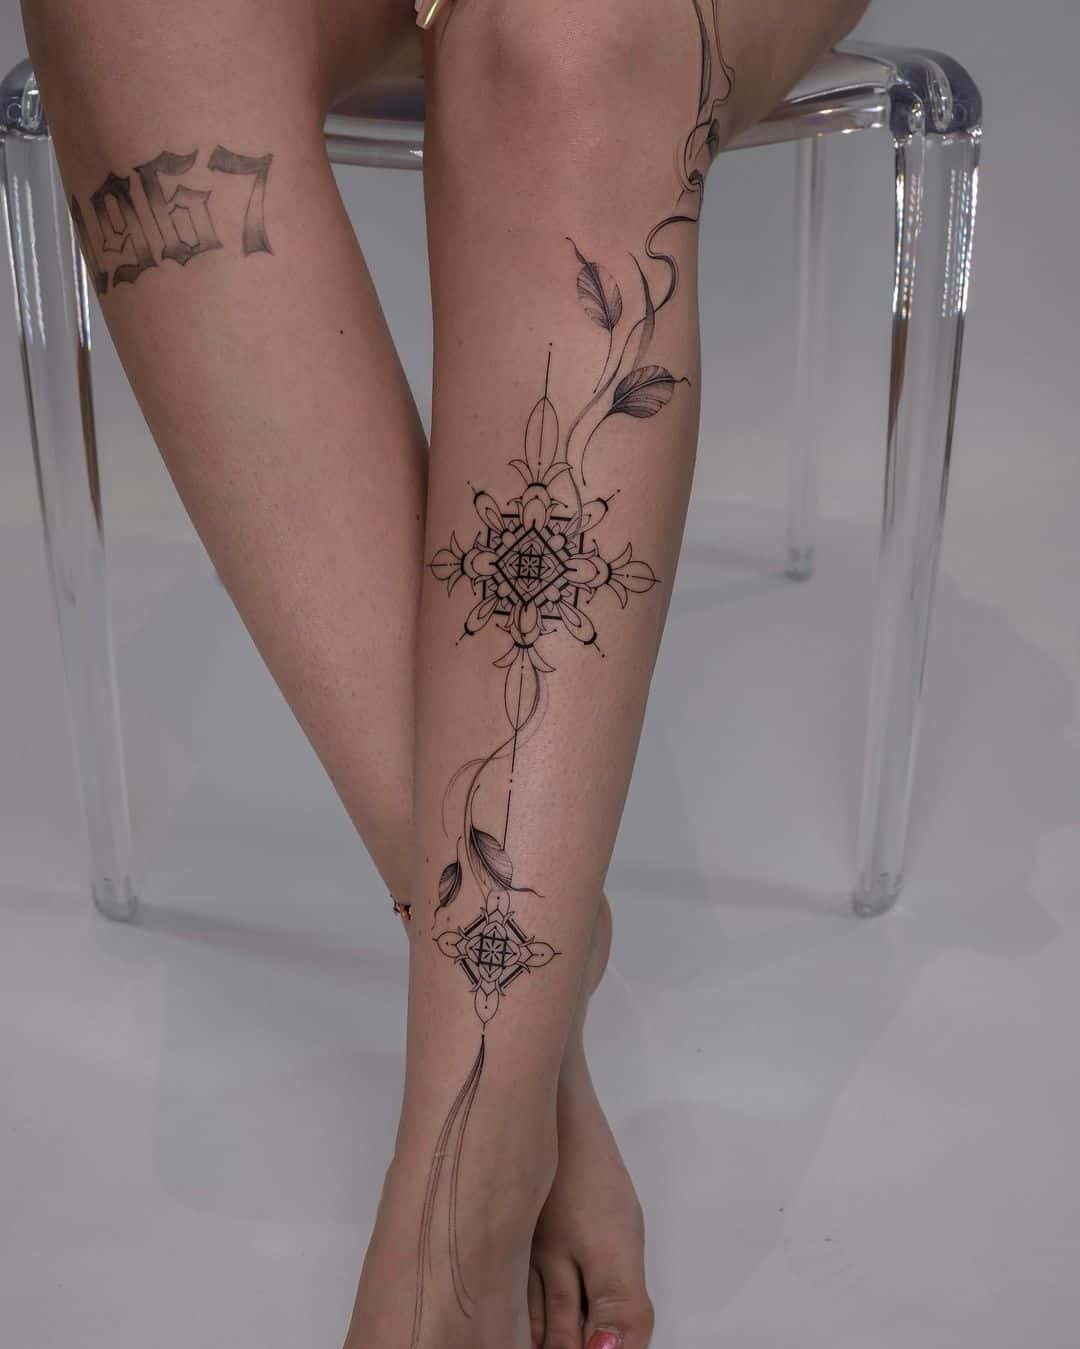 Realistic leg sleeve tattoos by monochrom.ink